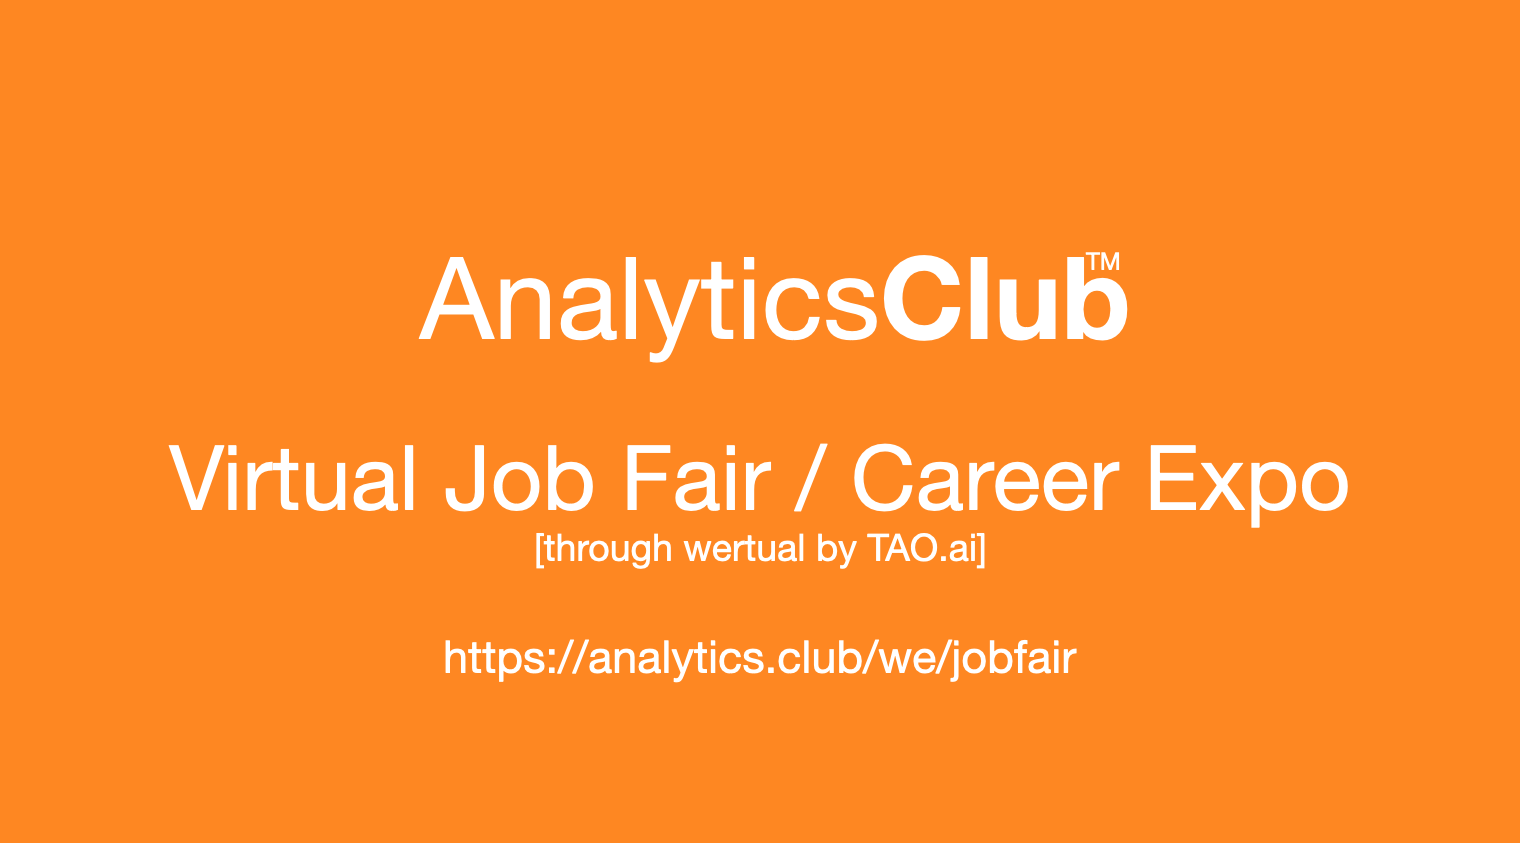 #AnalyticsClub Virtual Job Fair / Career Expo Event #Chicago